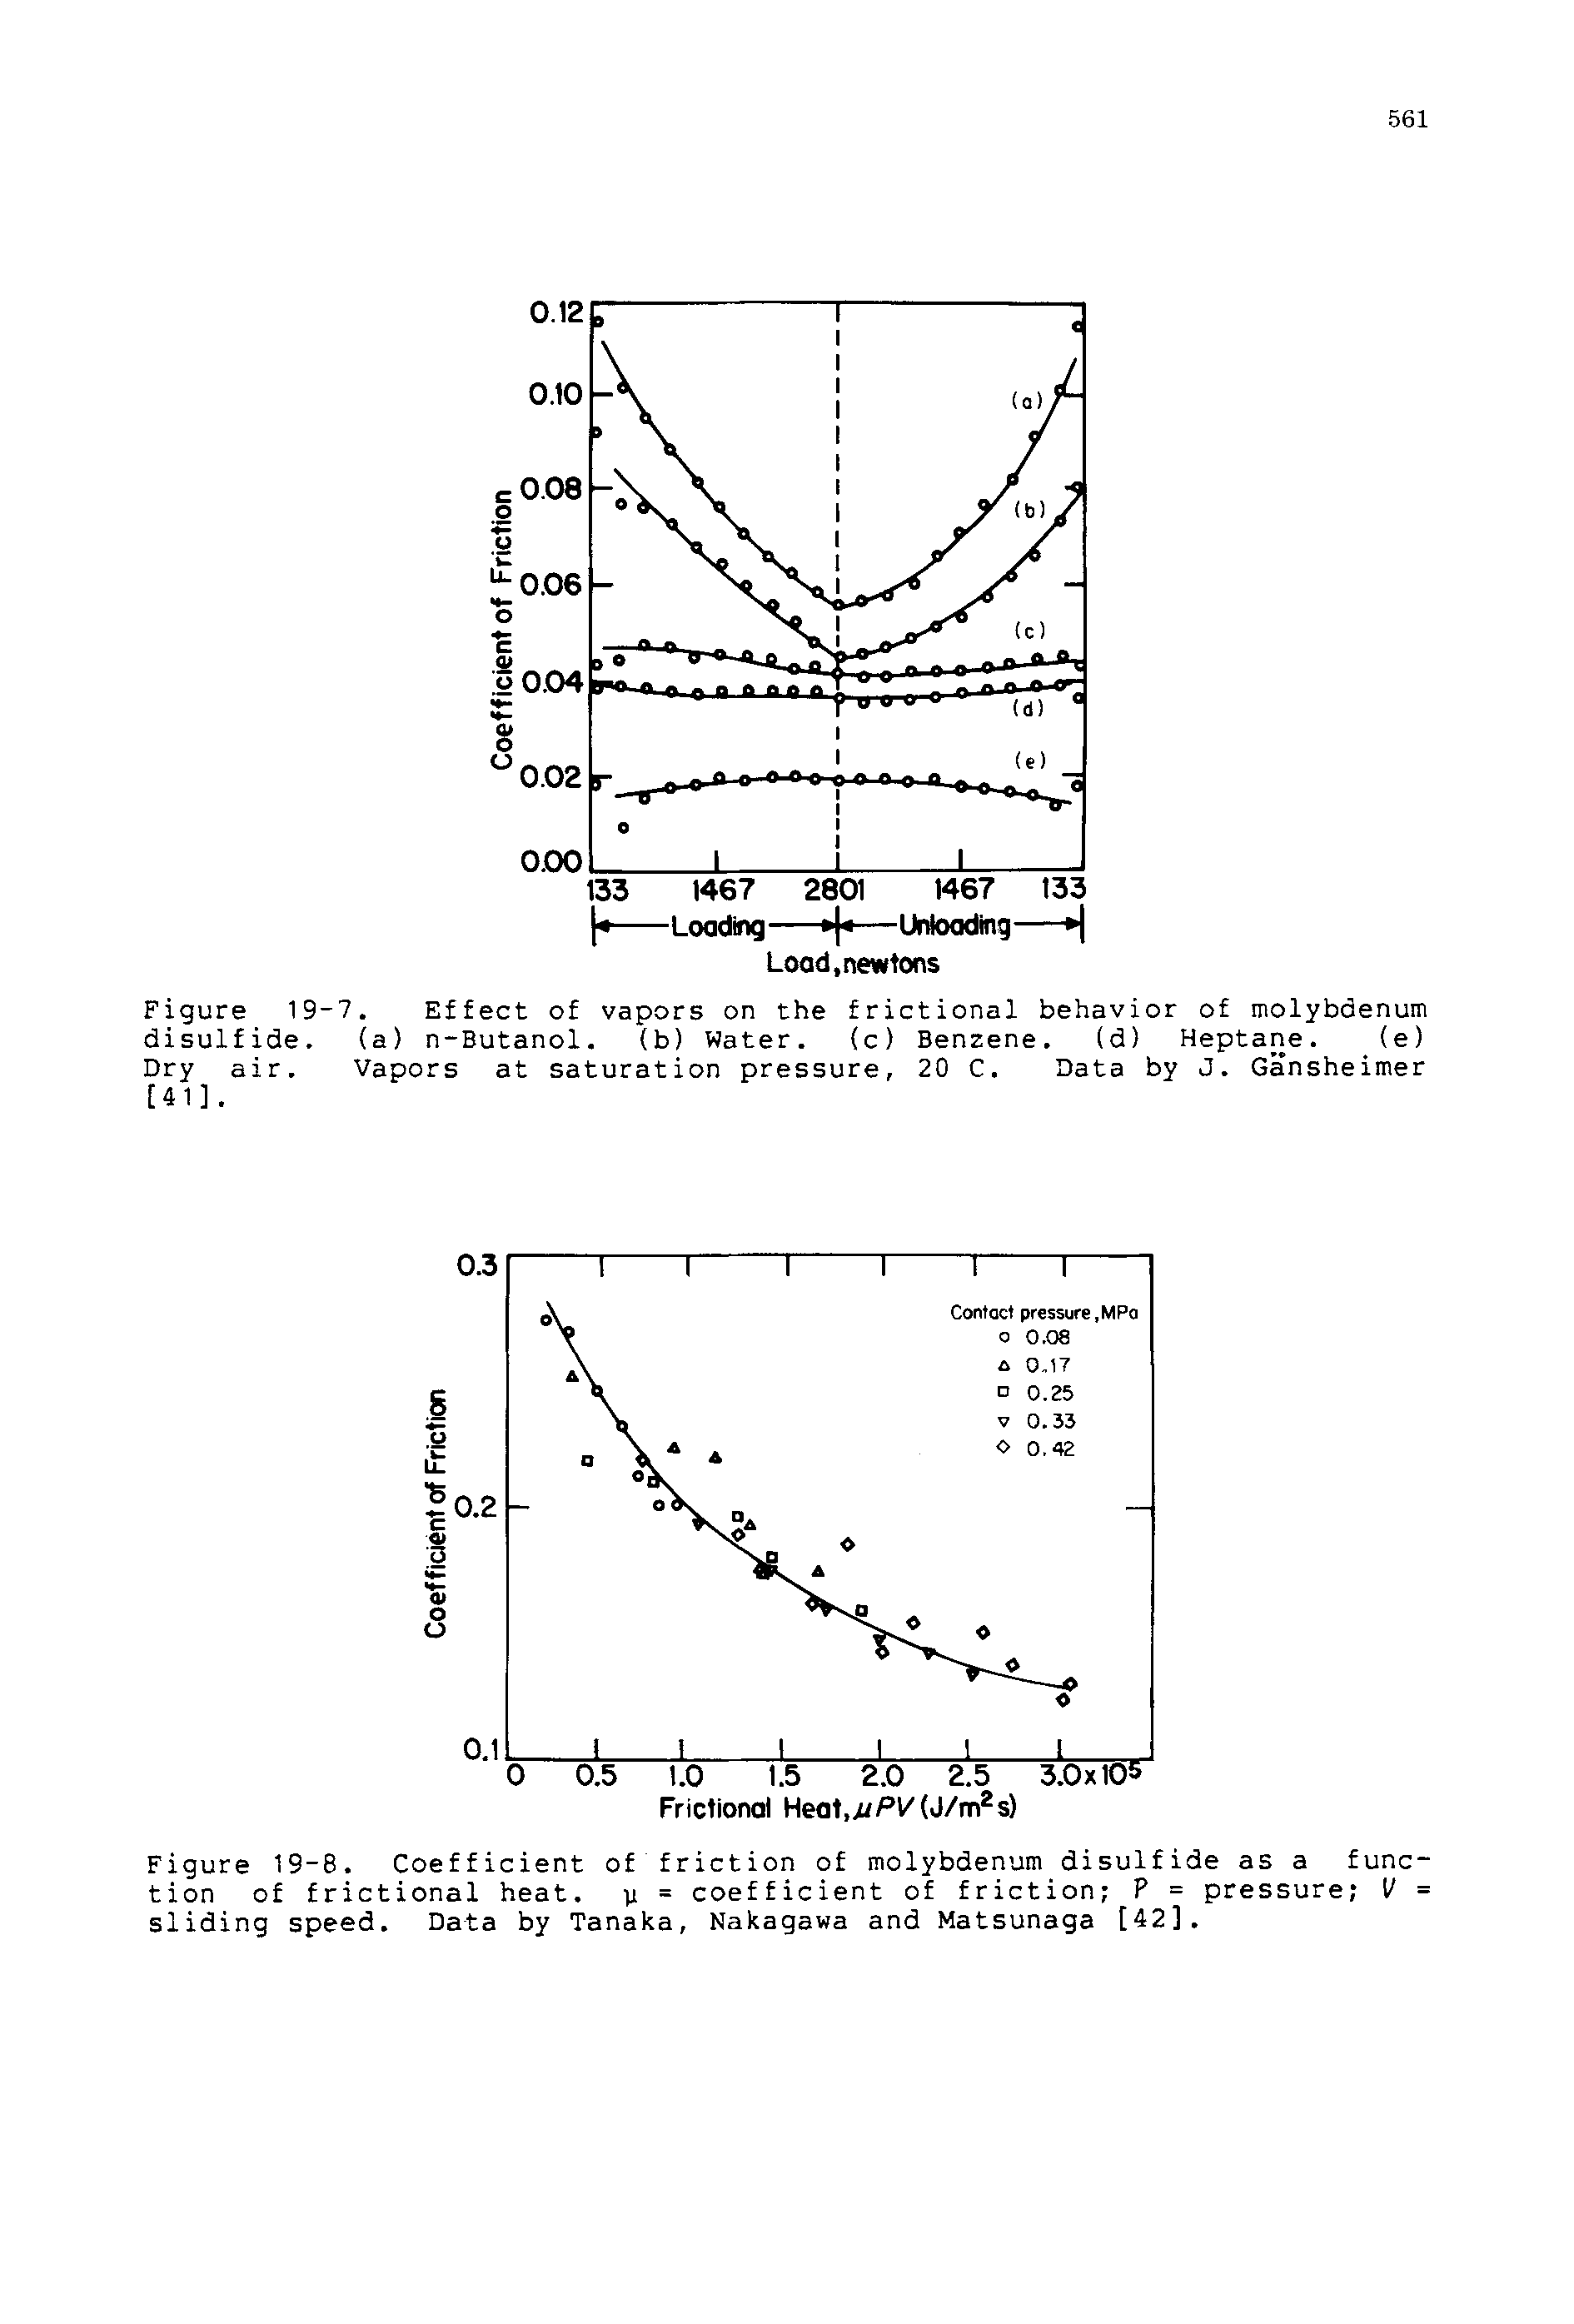 Figure 19-7. Effect of vapors on the frictional behavior of molybdenum disulfide. (a) n-Butanol. (b) Water. (c) Benzene. (d) Heptane. (e) Dry air. Vapors at saturation pressure, 20 C. Data by J. Gansheimer [41].